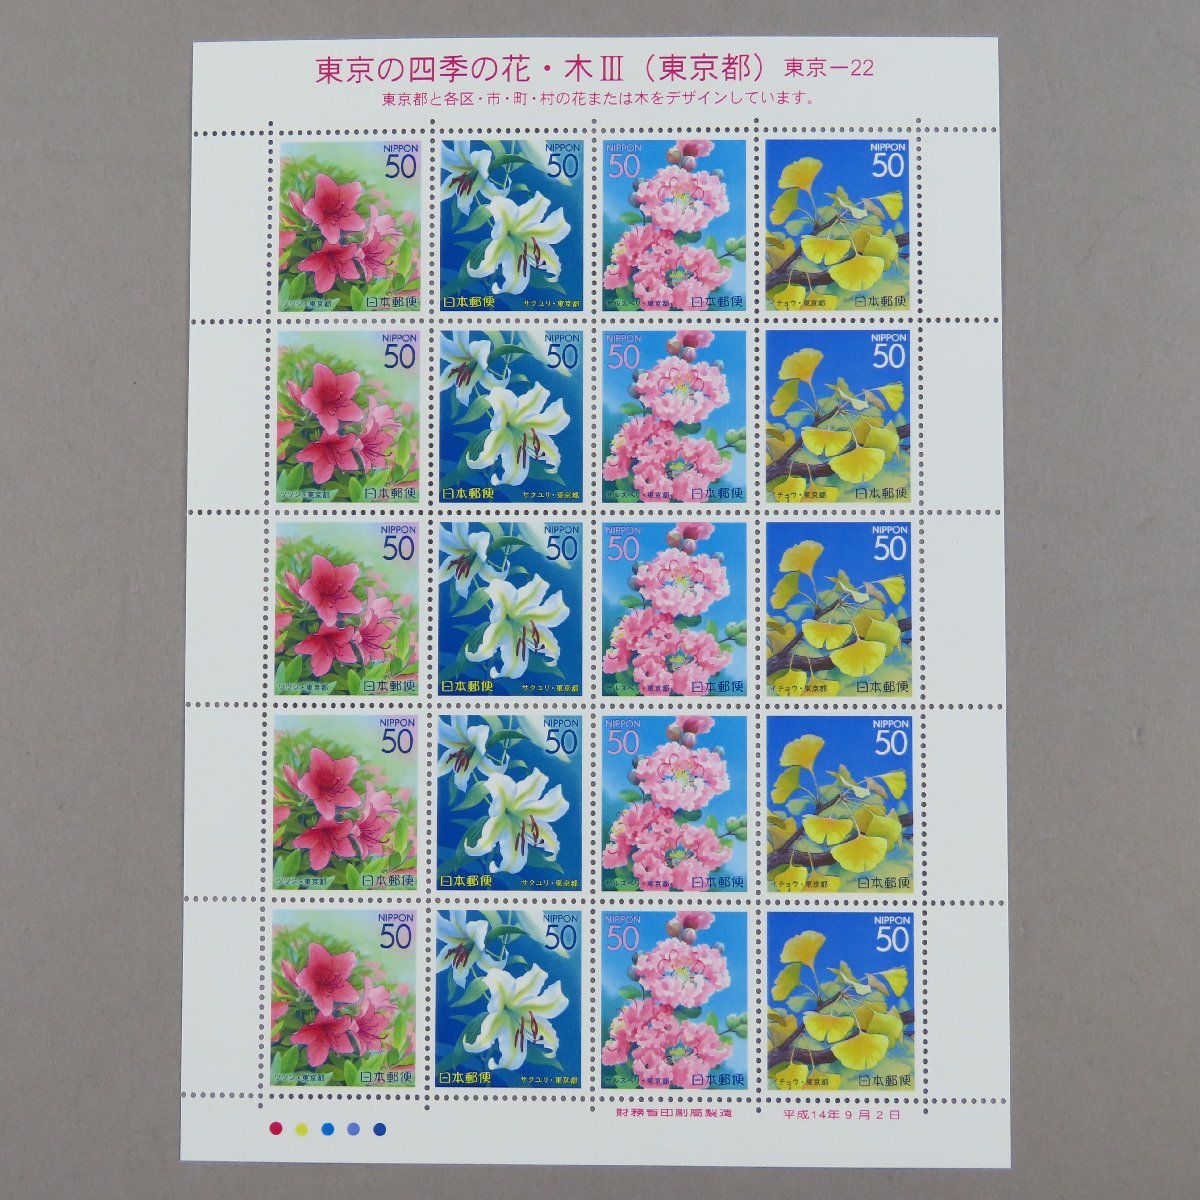 [ stamp 2011] Furusato Stamp Tokyo. flowers of four seasons * tree Ⅲ 50 jpy 20 surface 1 seat 